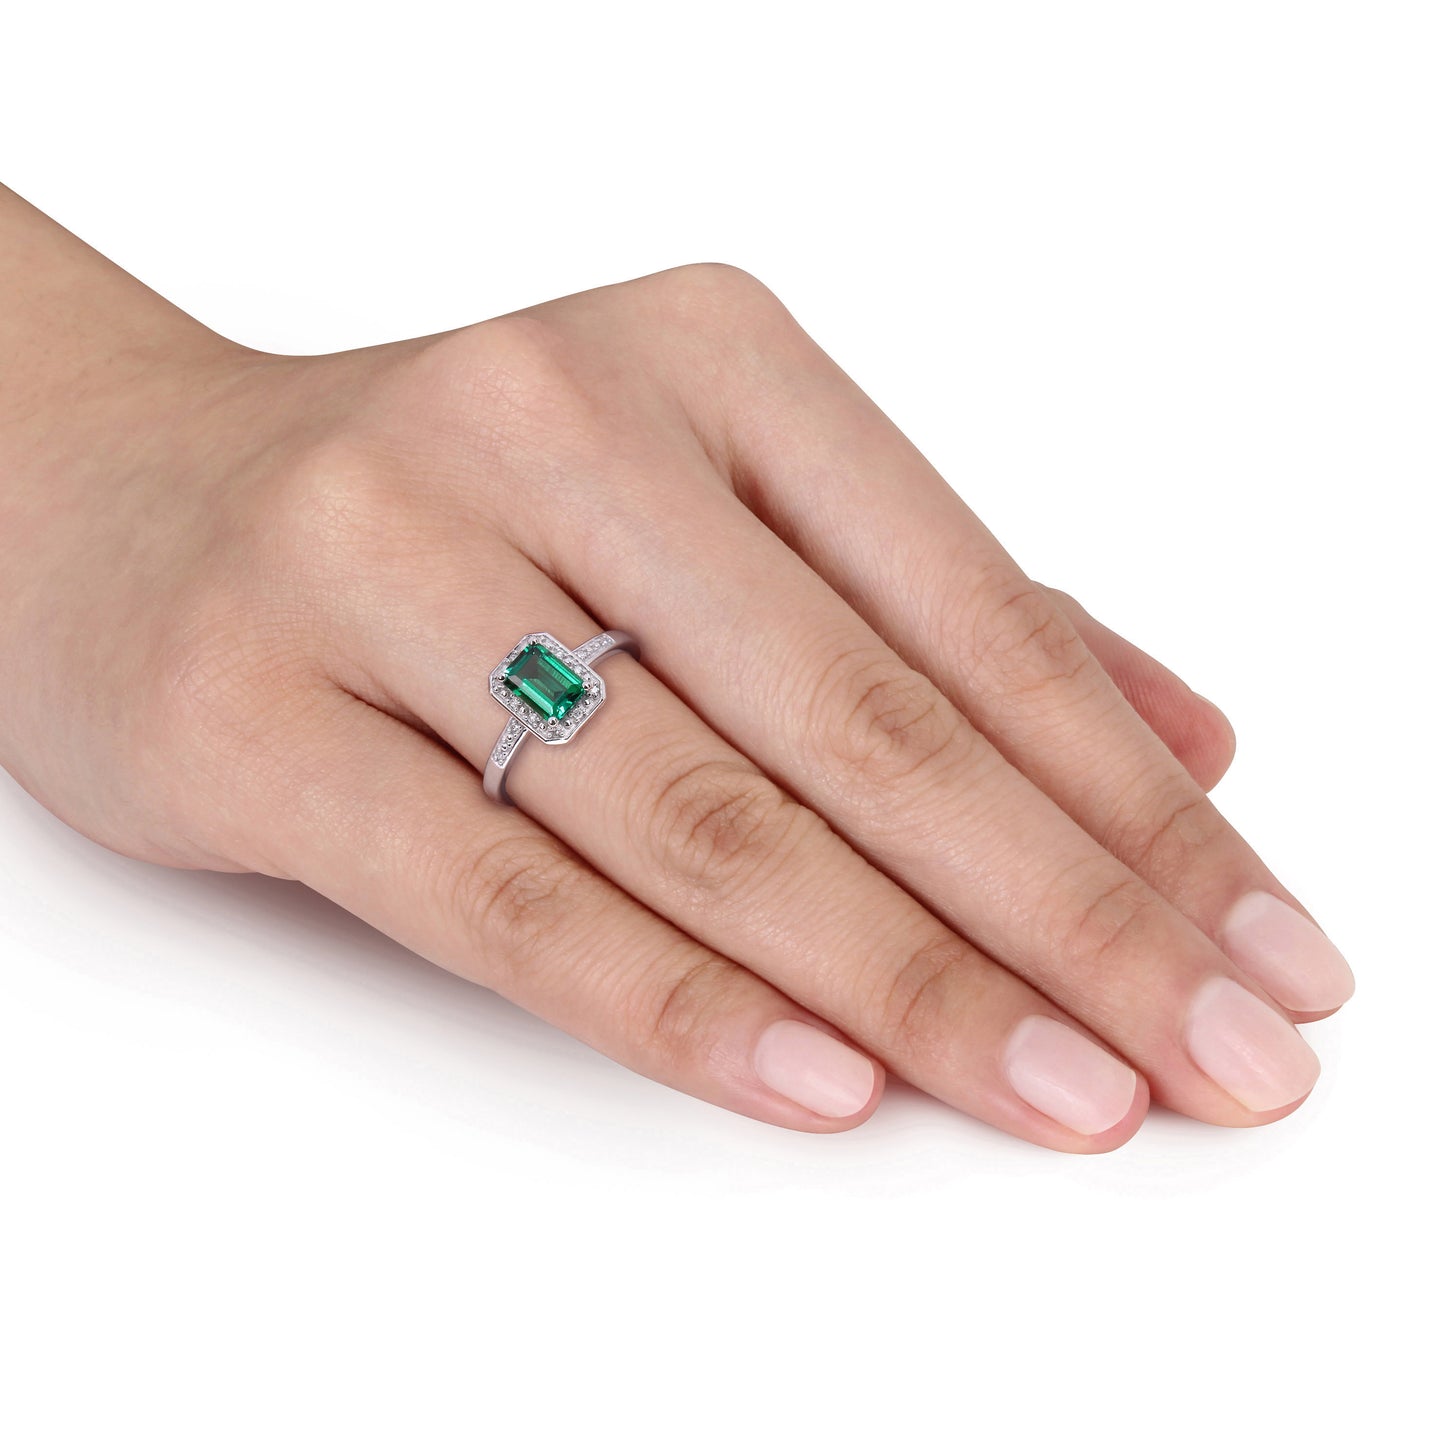 Created Emerald & Diamond Ring in 10k White Gold